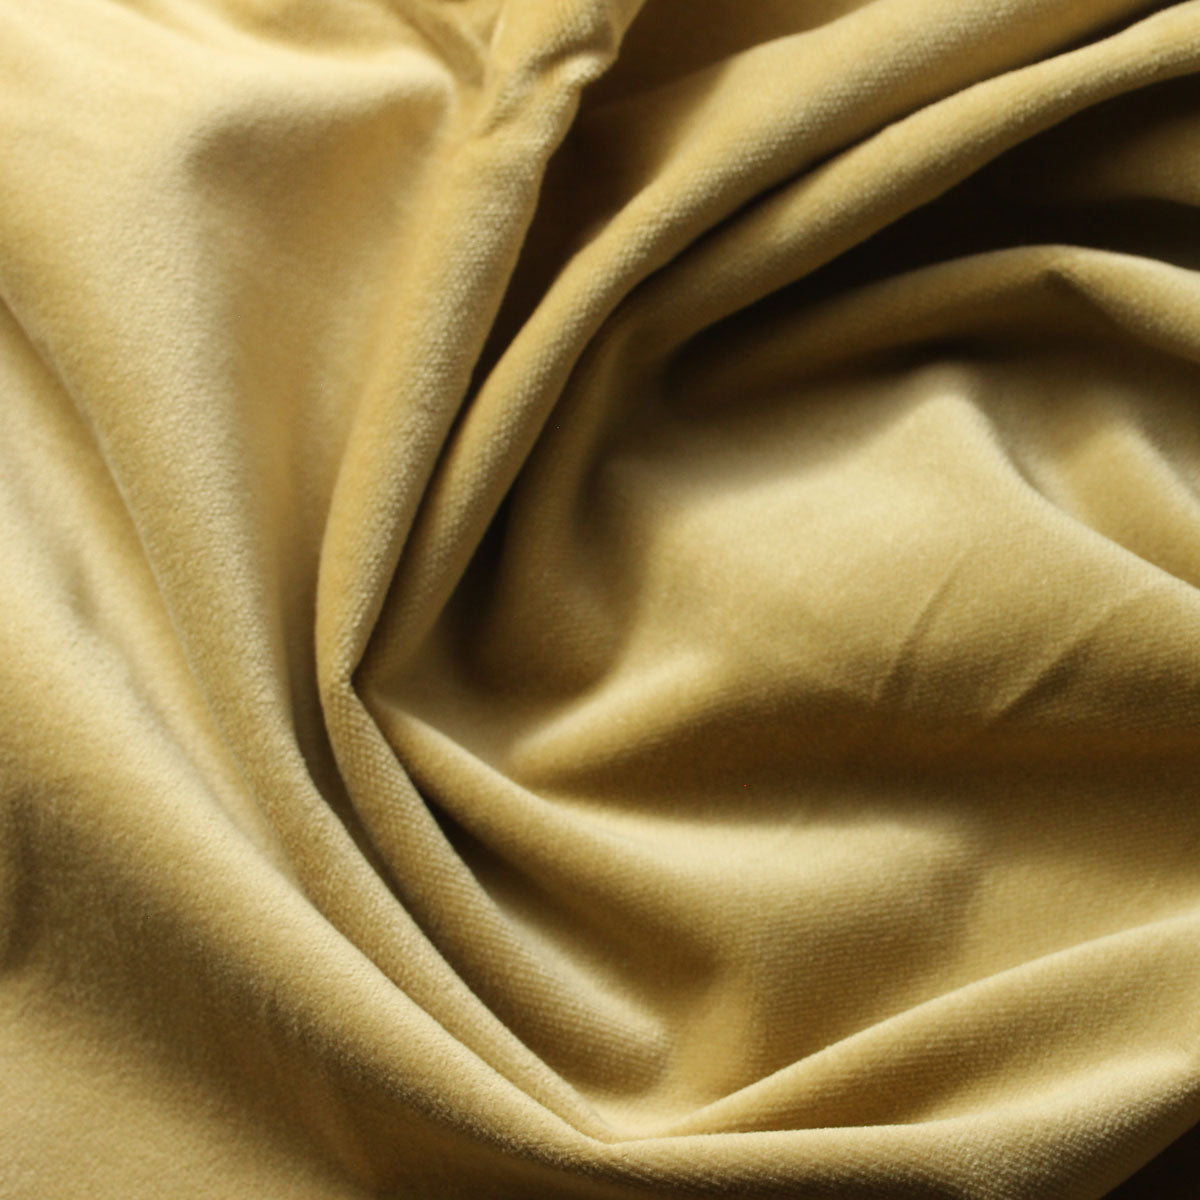 Antique Gold Cotton Velvet Upholstery Drapery Fabric - Fashion Fabrics Los Angeles 